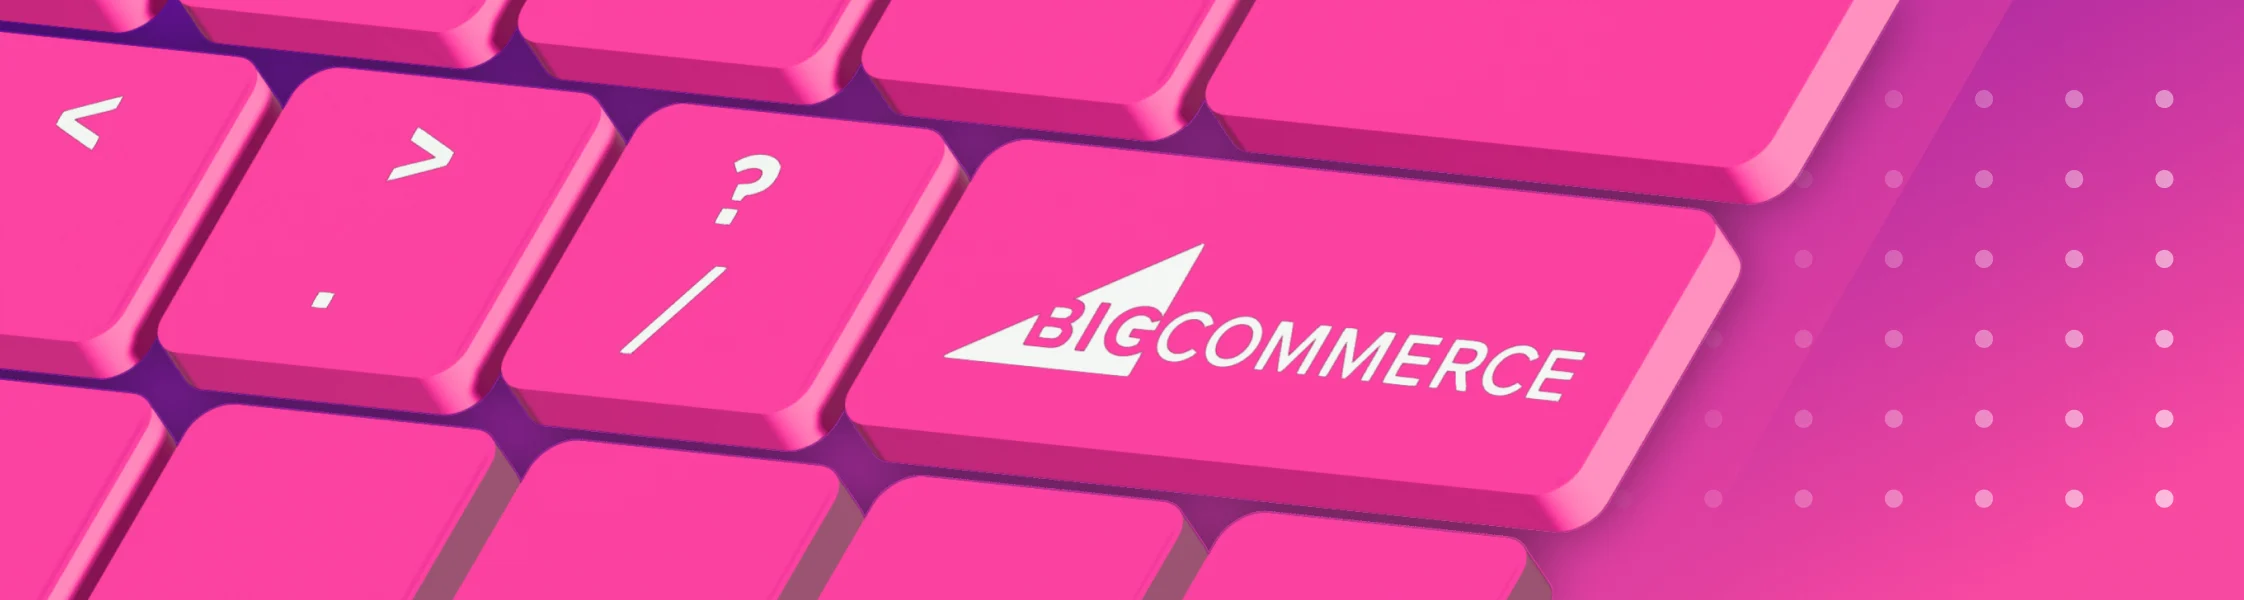 https://cms-wp.bigcommerce.com/wp-content/uploads/2023/04/4452CD_EcommercePIM-pinkheader-May2022-keyboard_Header.jpg